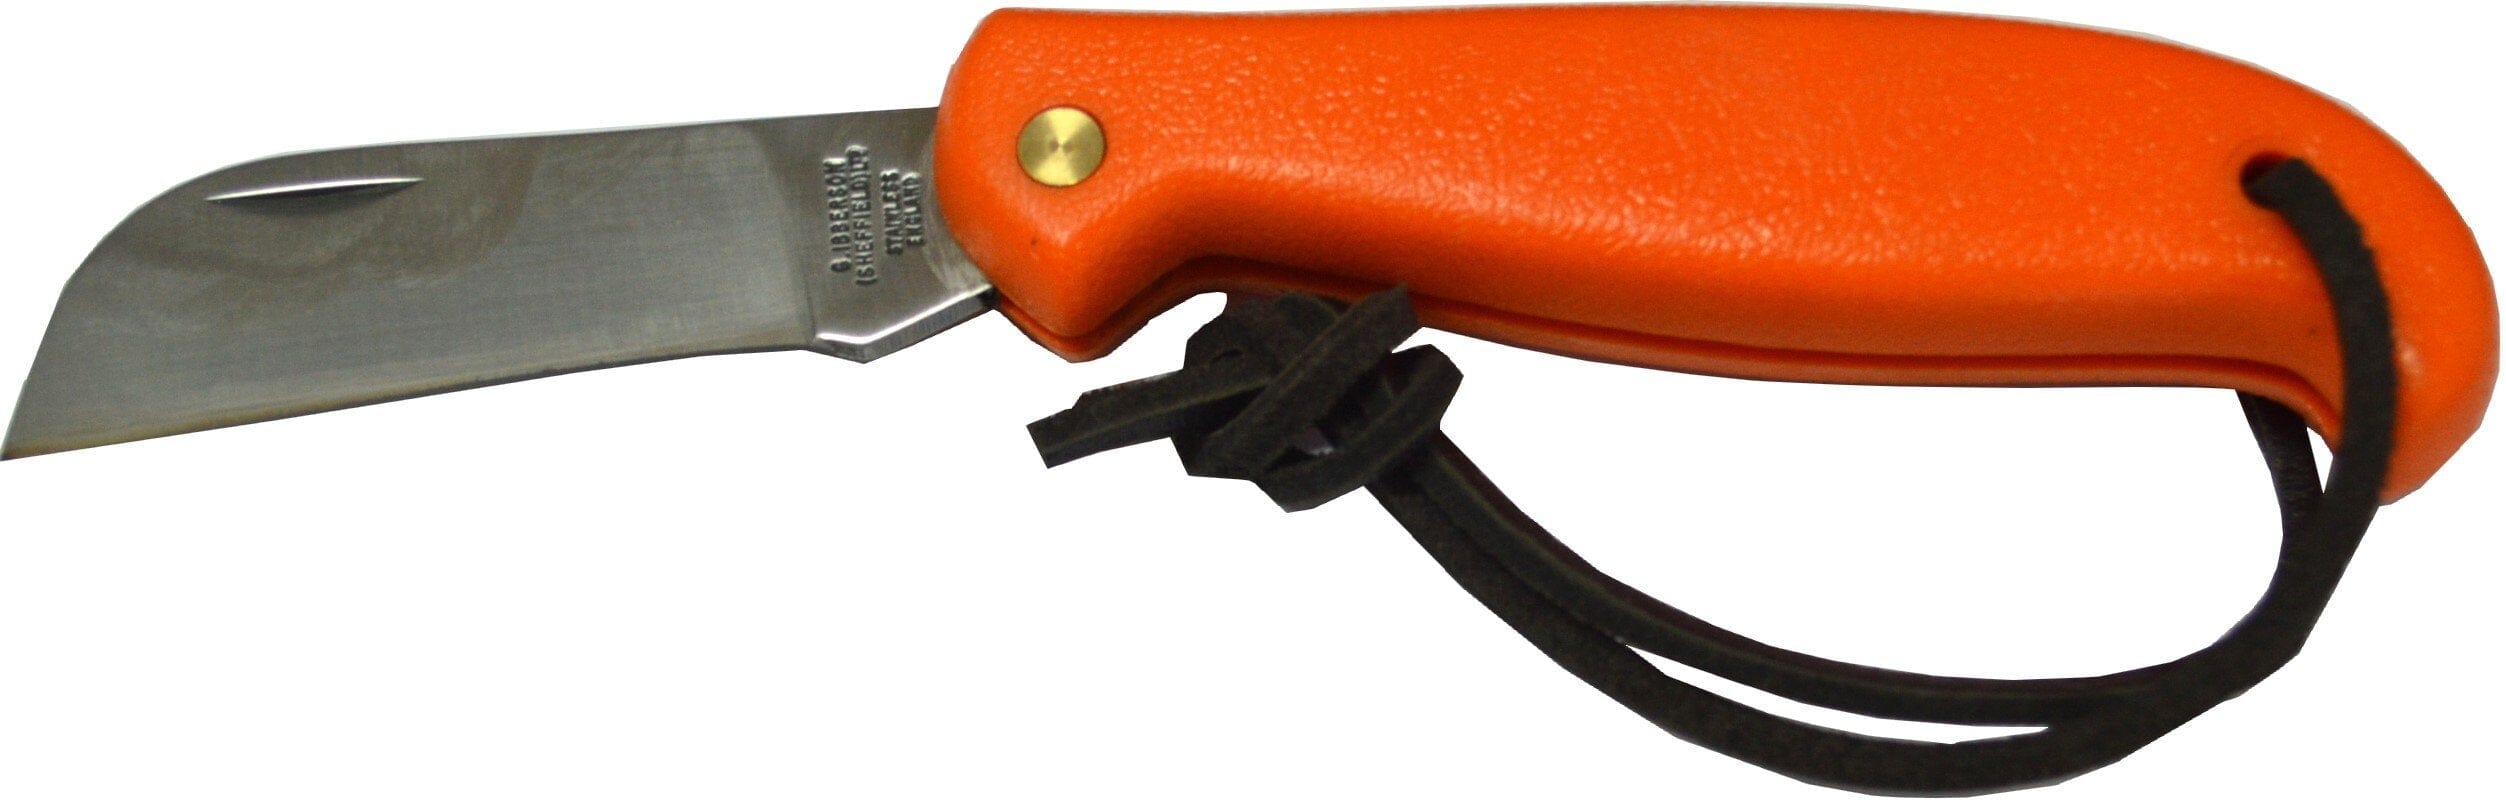 Ibberson Pocket Knife Heavy Duty Stainless Blade Orange Handle